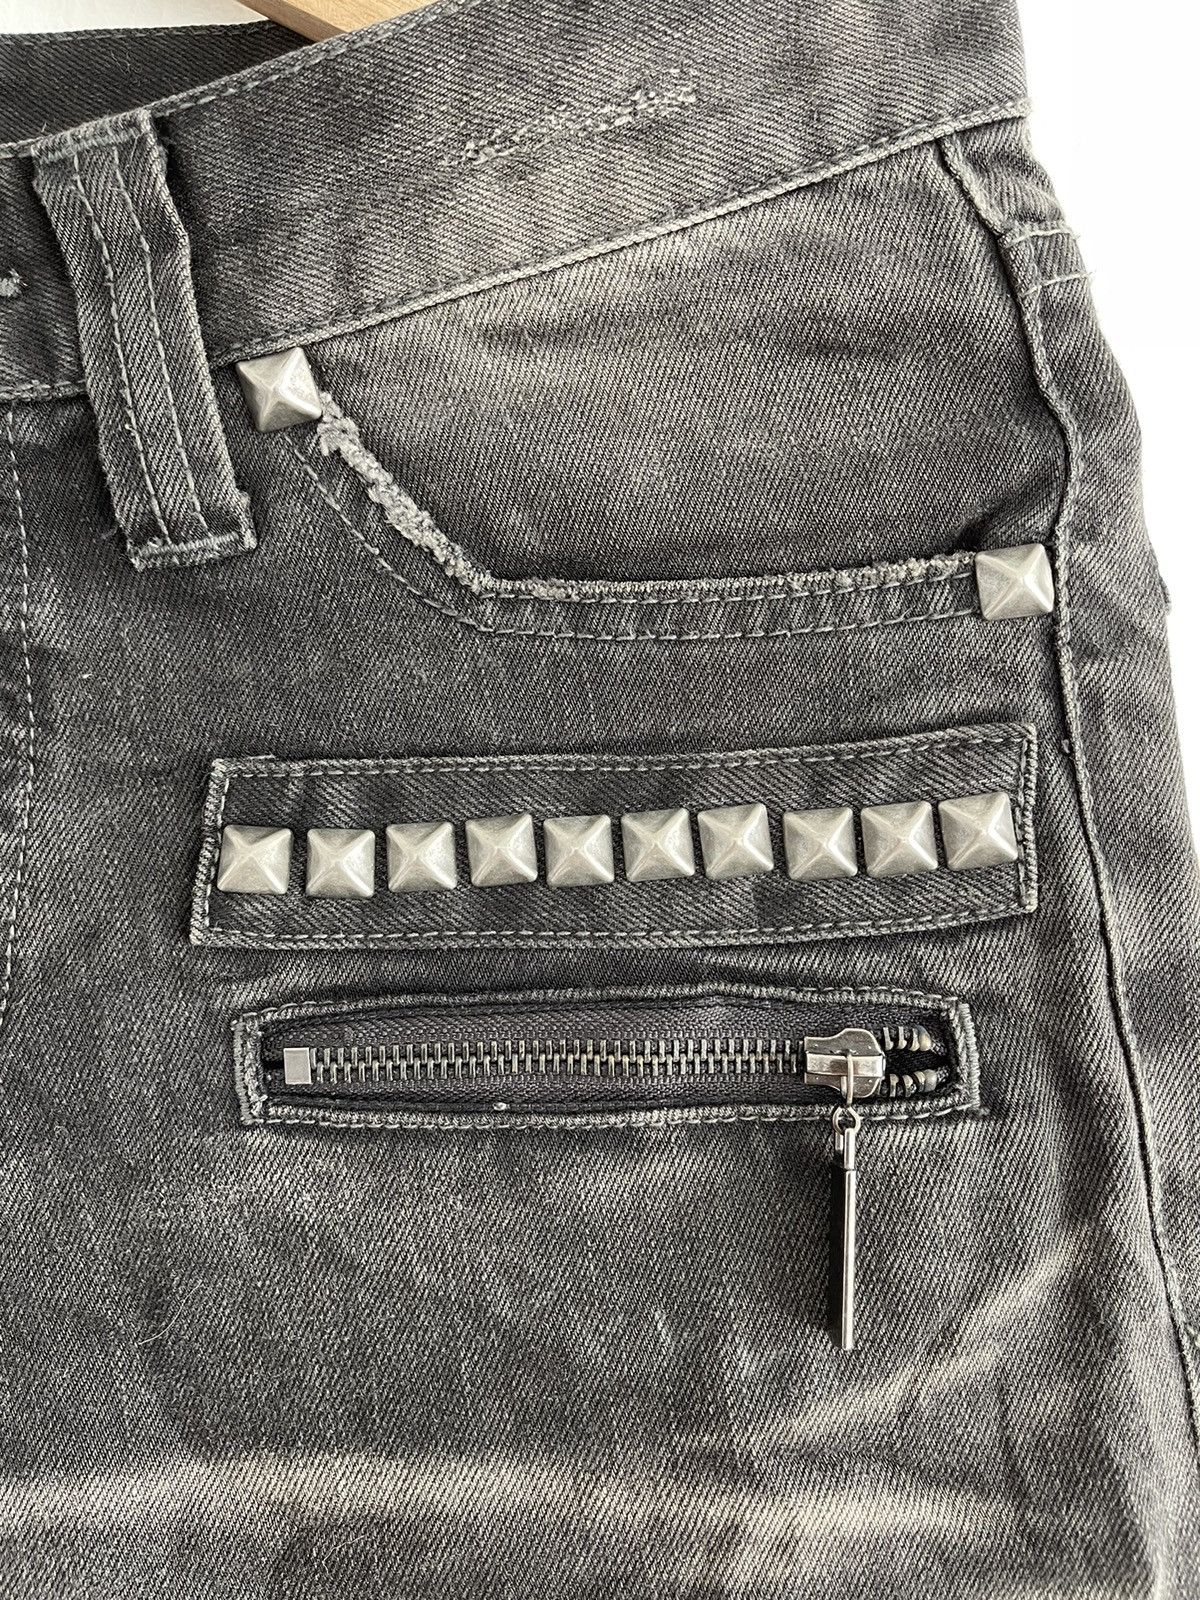 Japanese Brand - SEMANTIC DESIGN Punk Style Zipper Bootcut Flared Jeans - 12